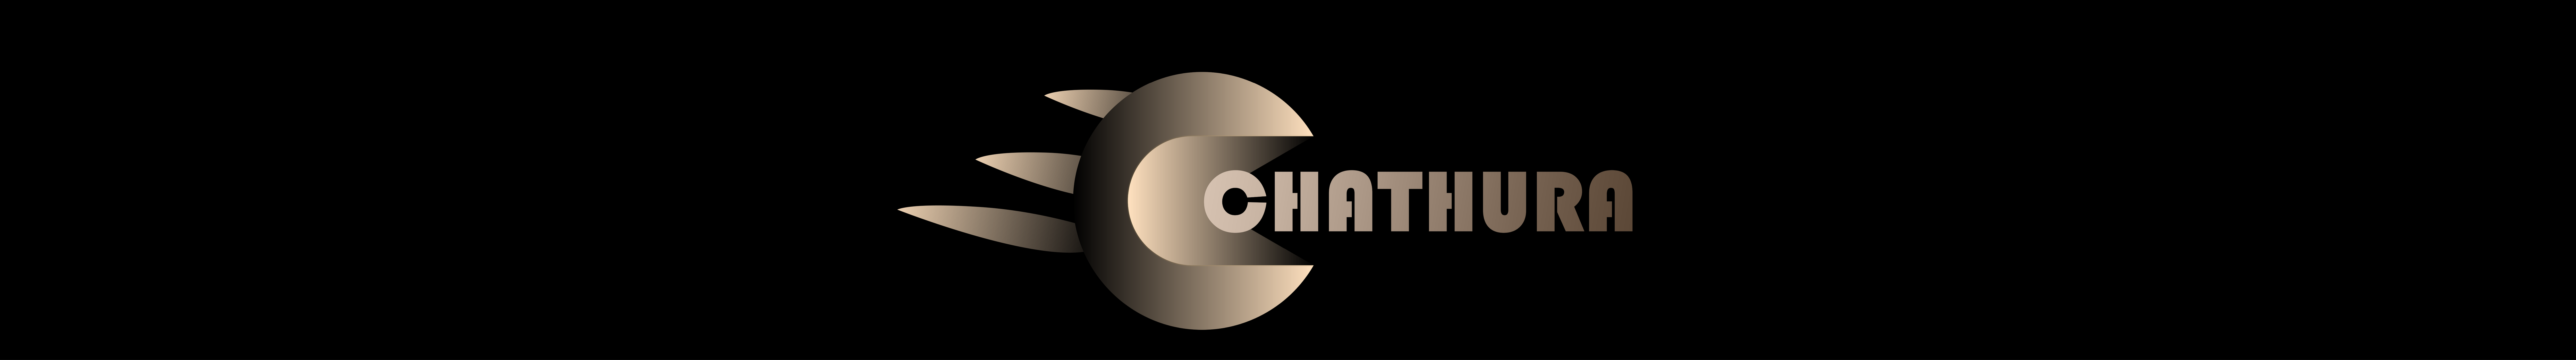 Chathura Hettiarachchi's profile banner